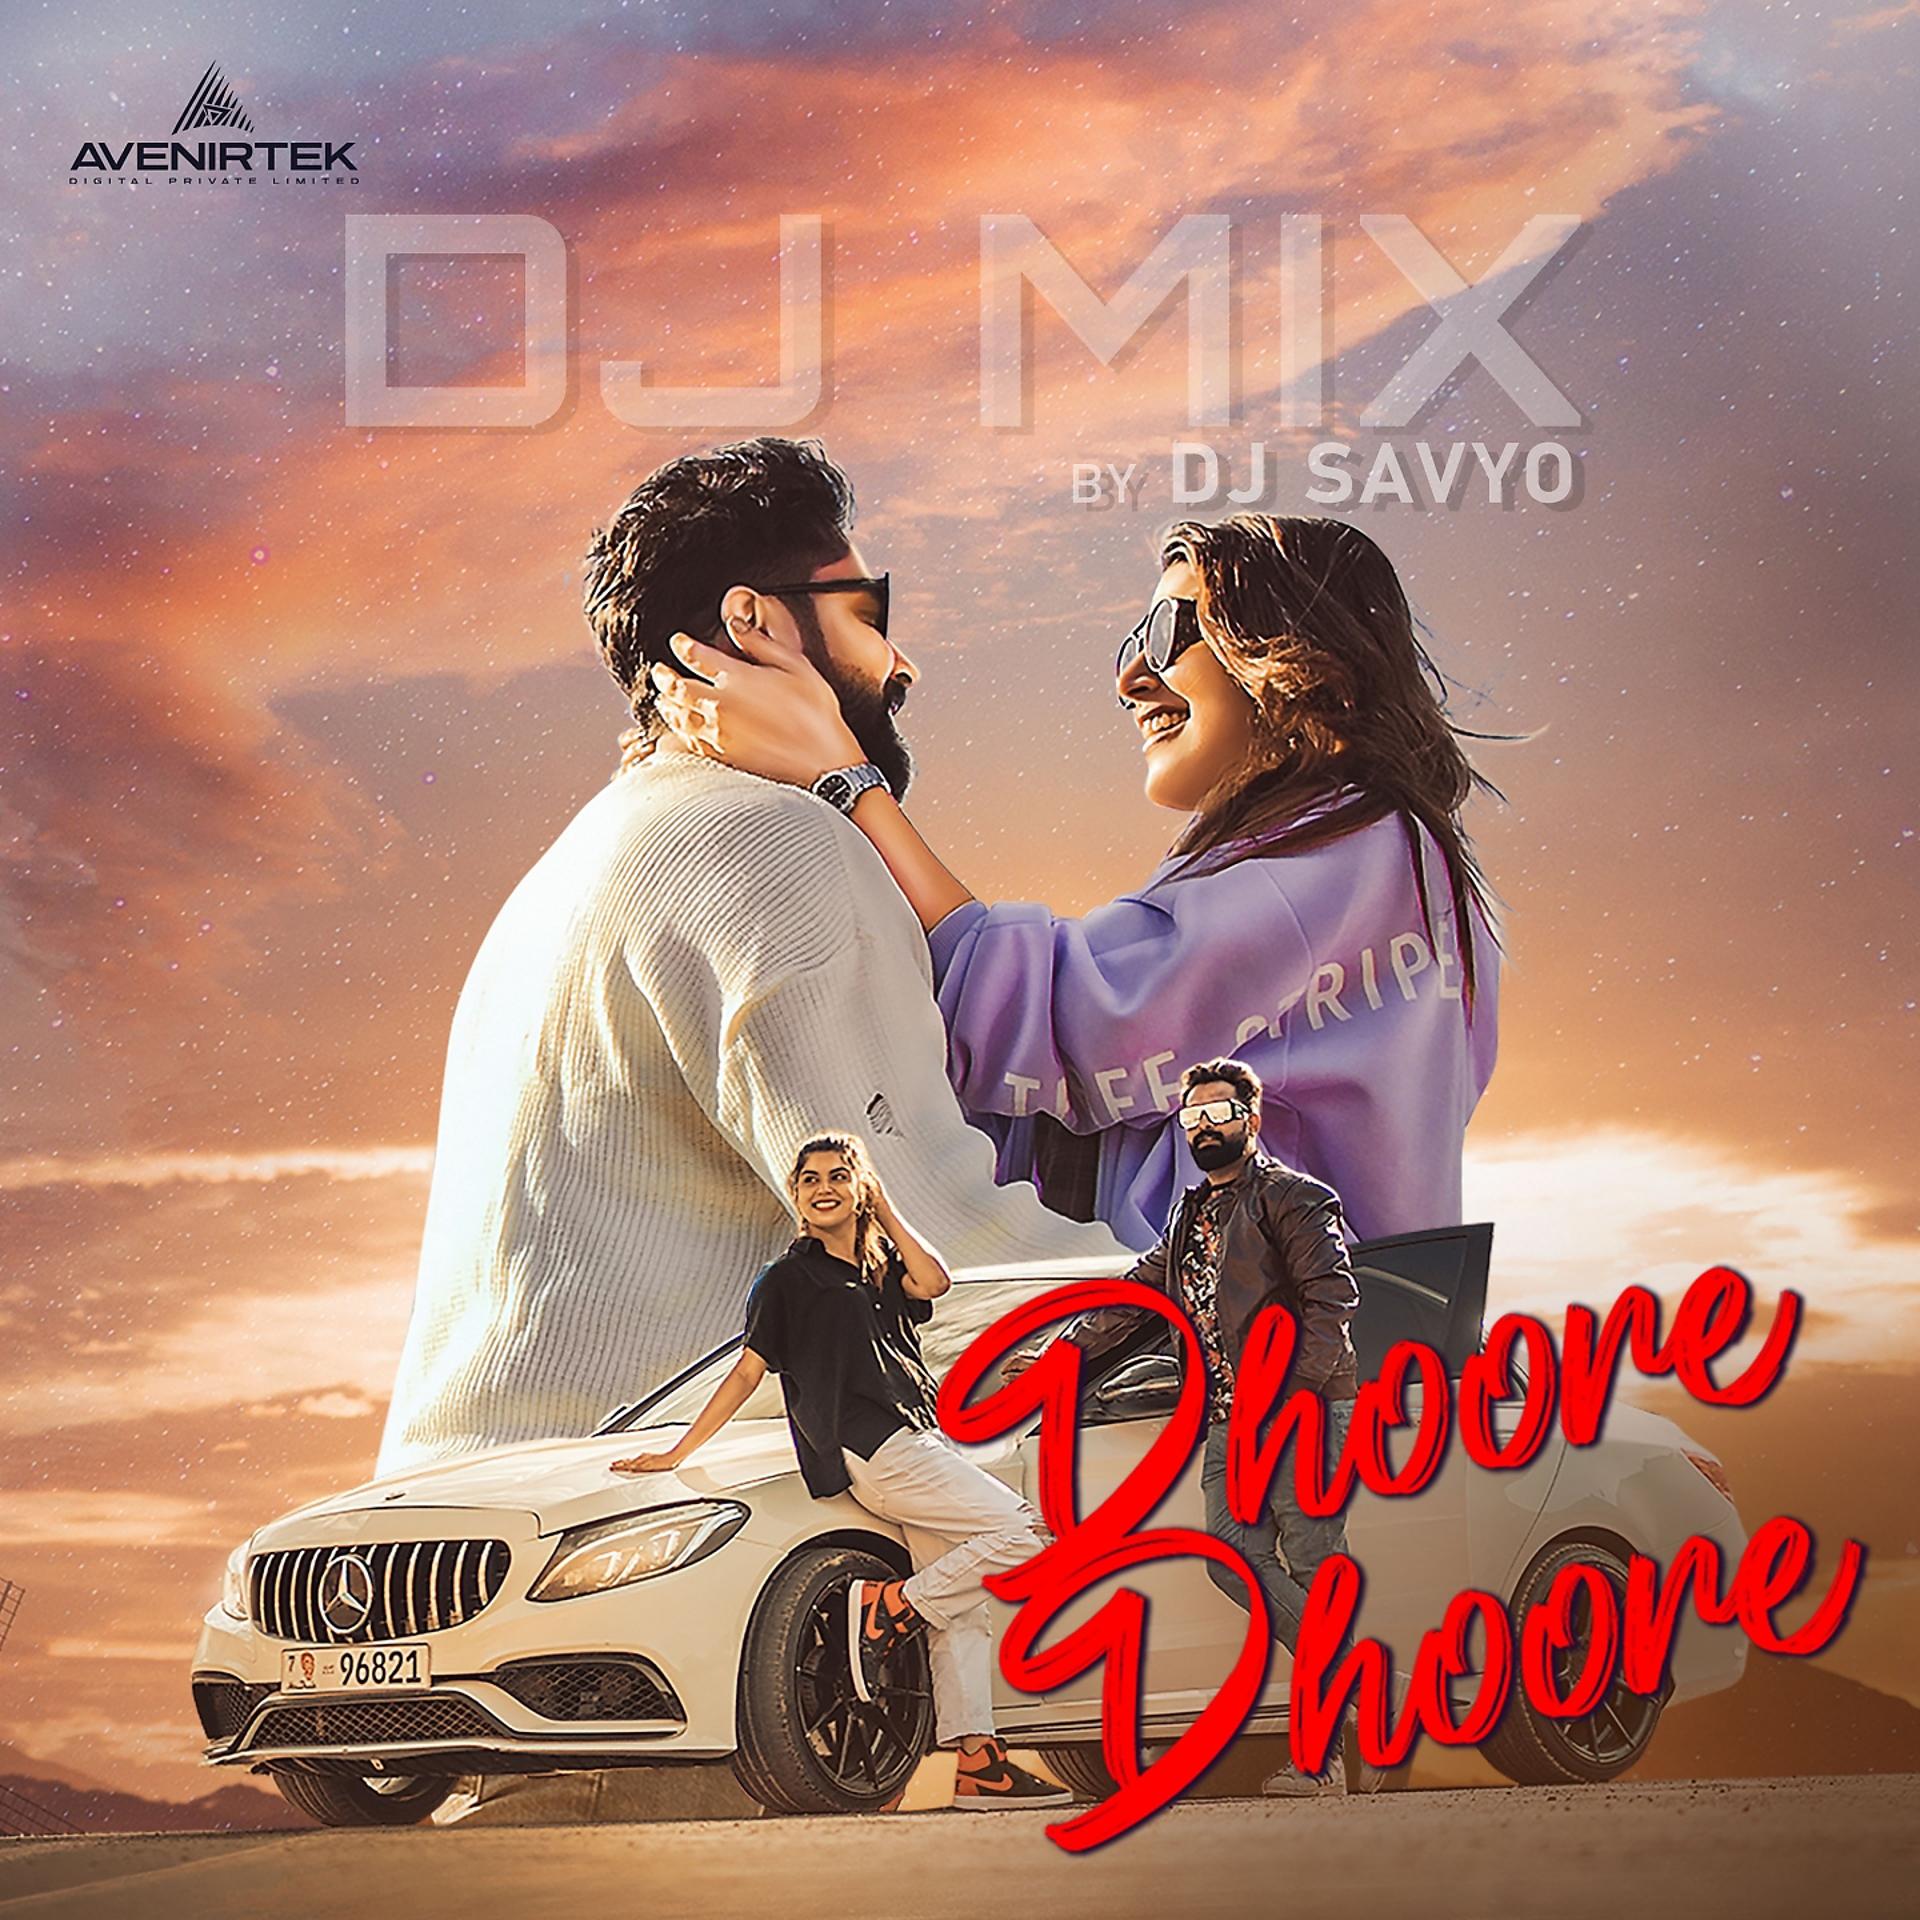 Постер альбома Dhoore Dhoore